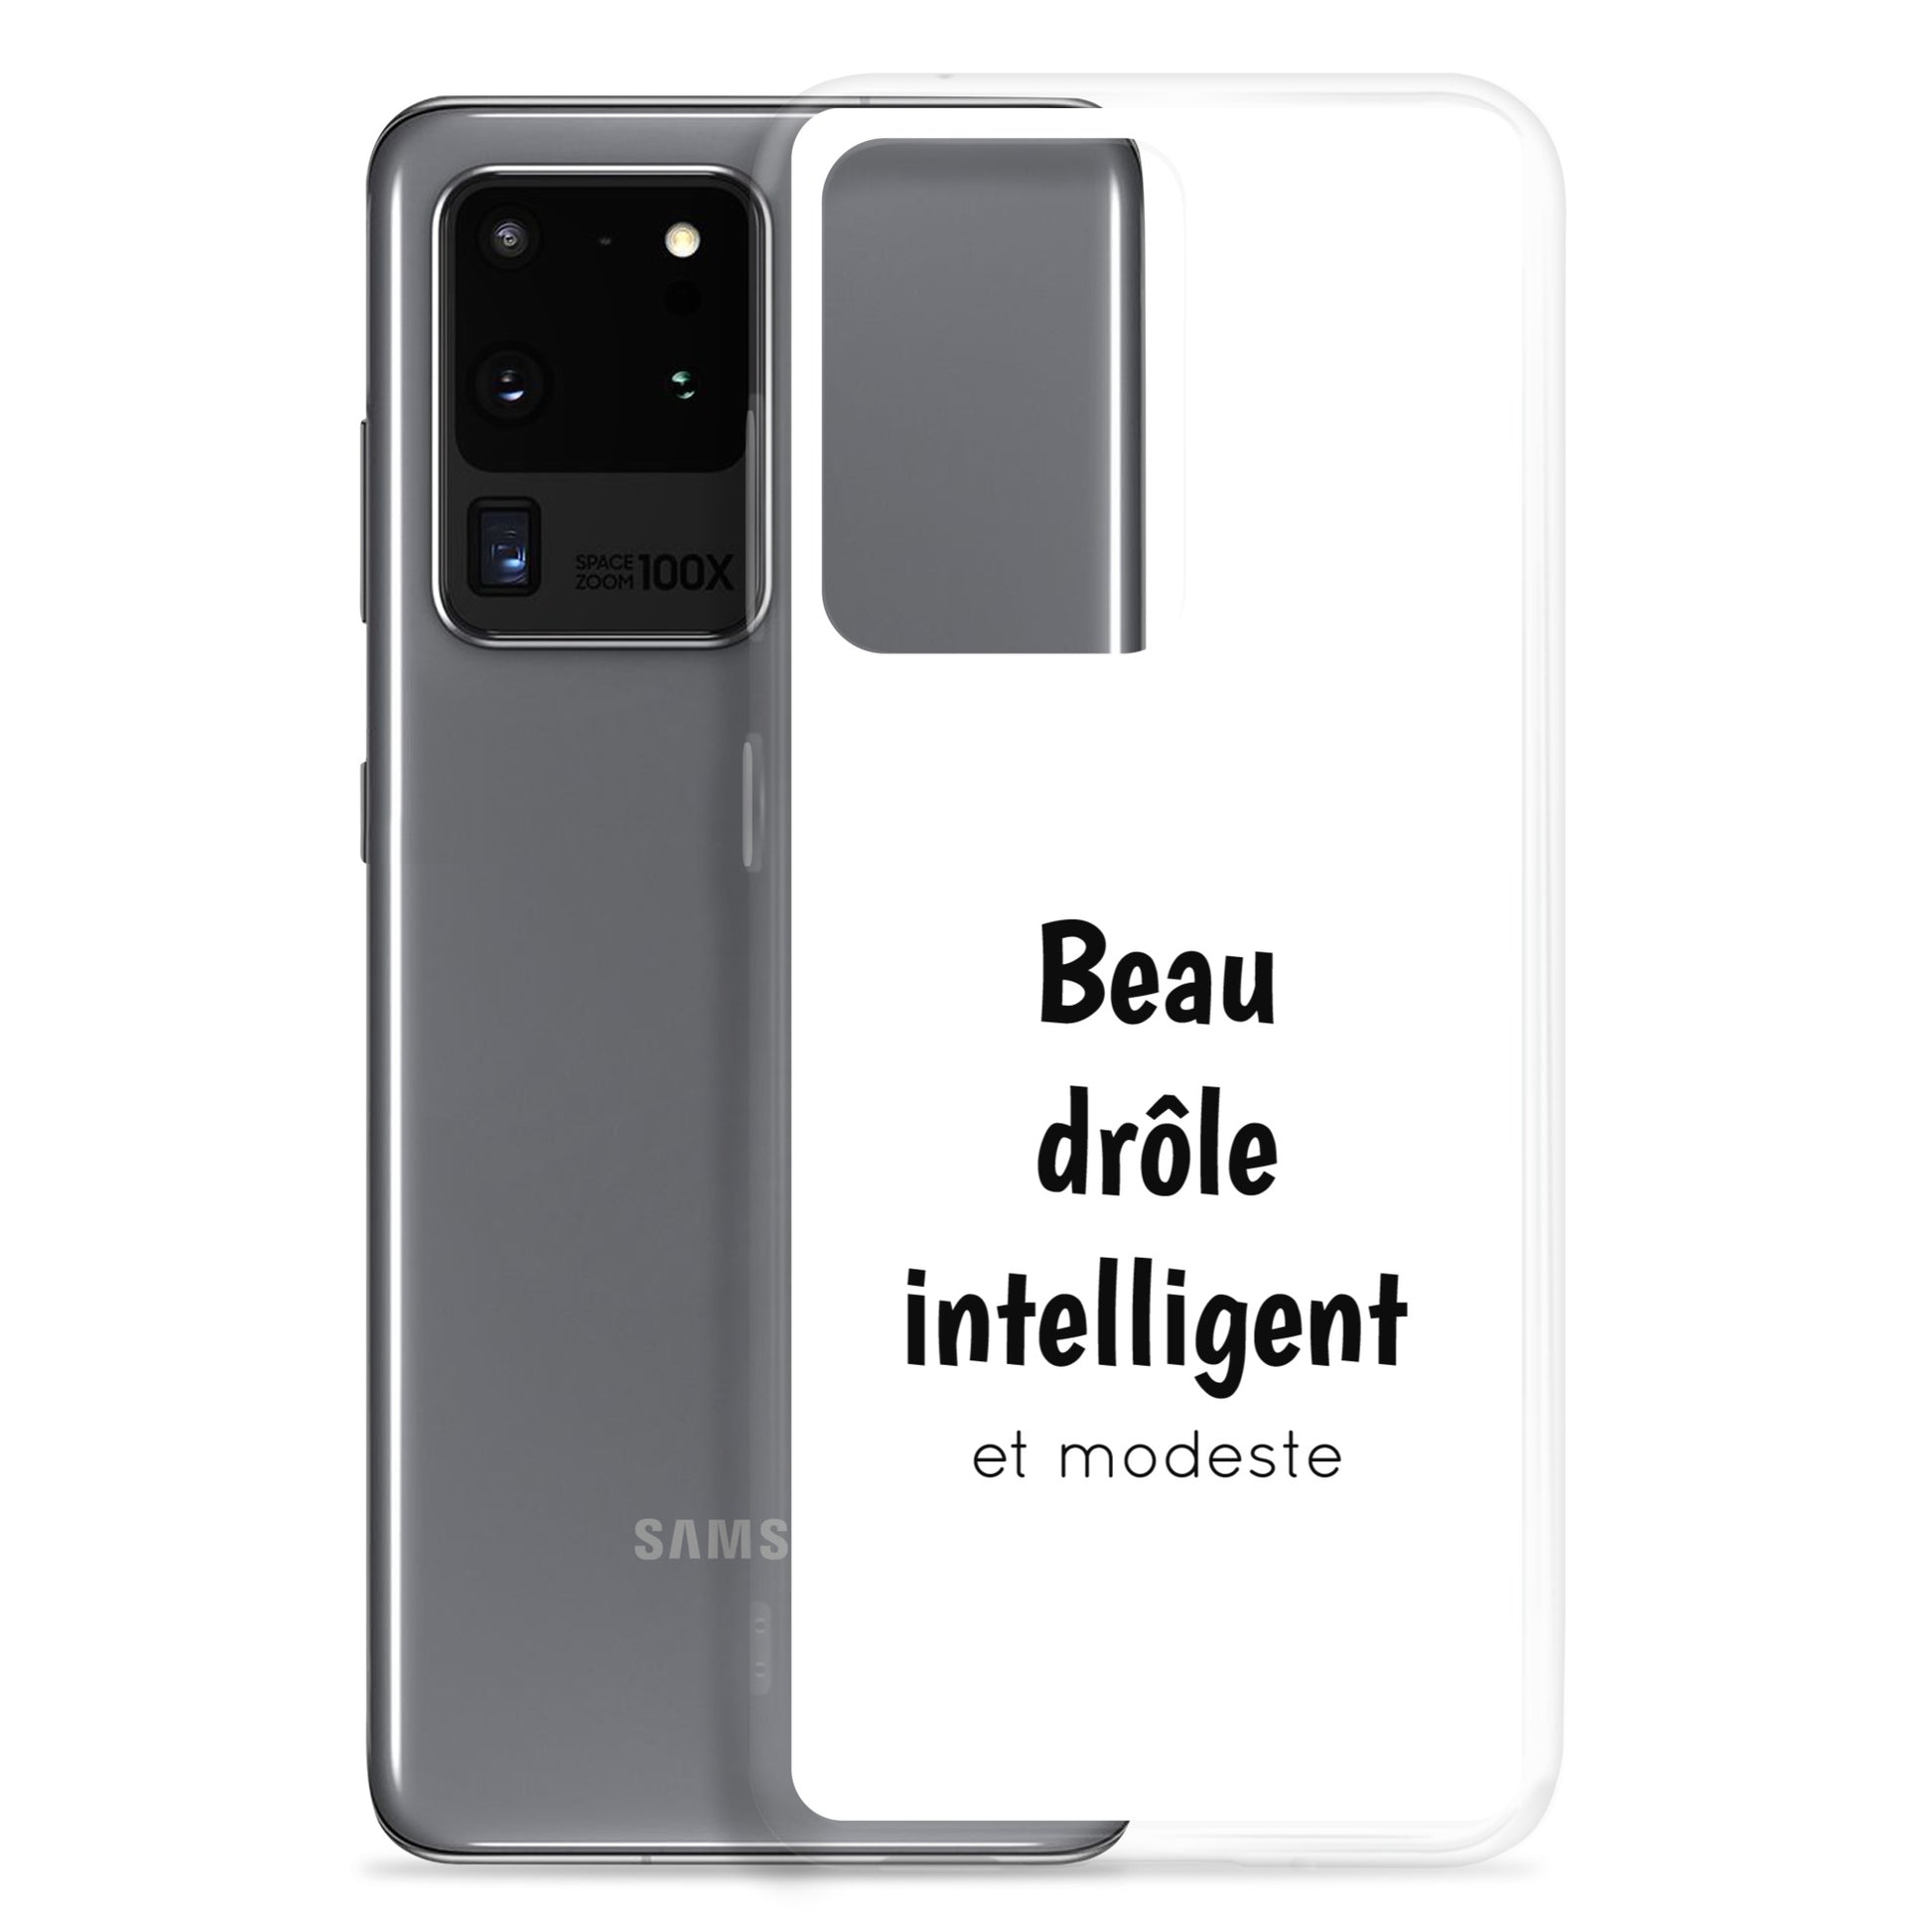 Coque Samsung Beau drôle intelligent et modeste - Sedurro